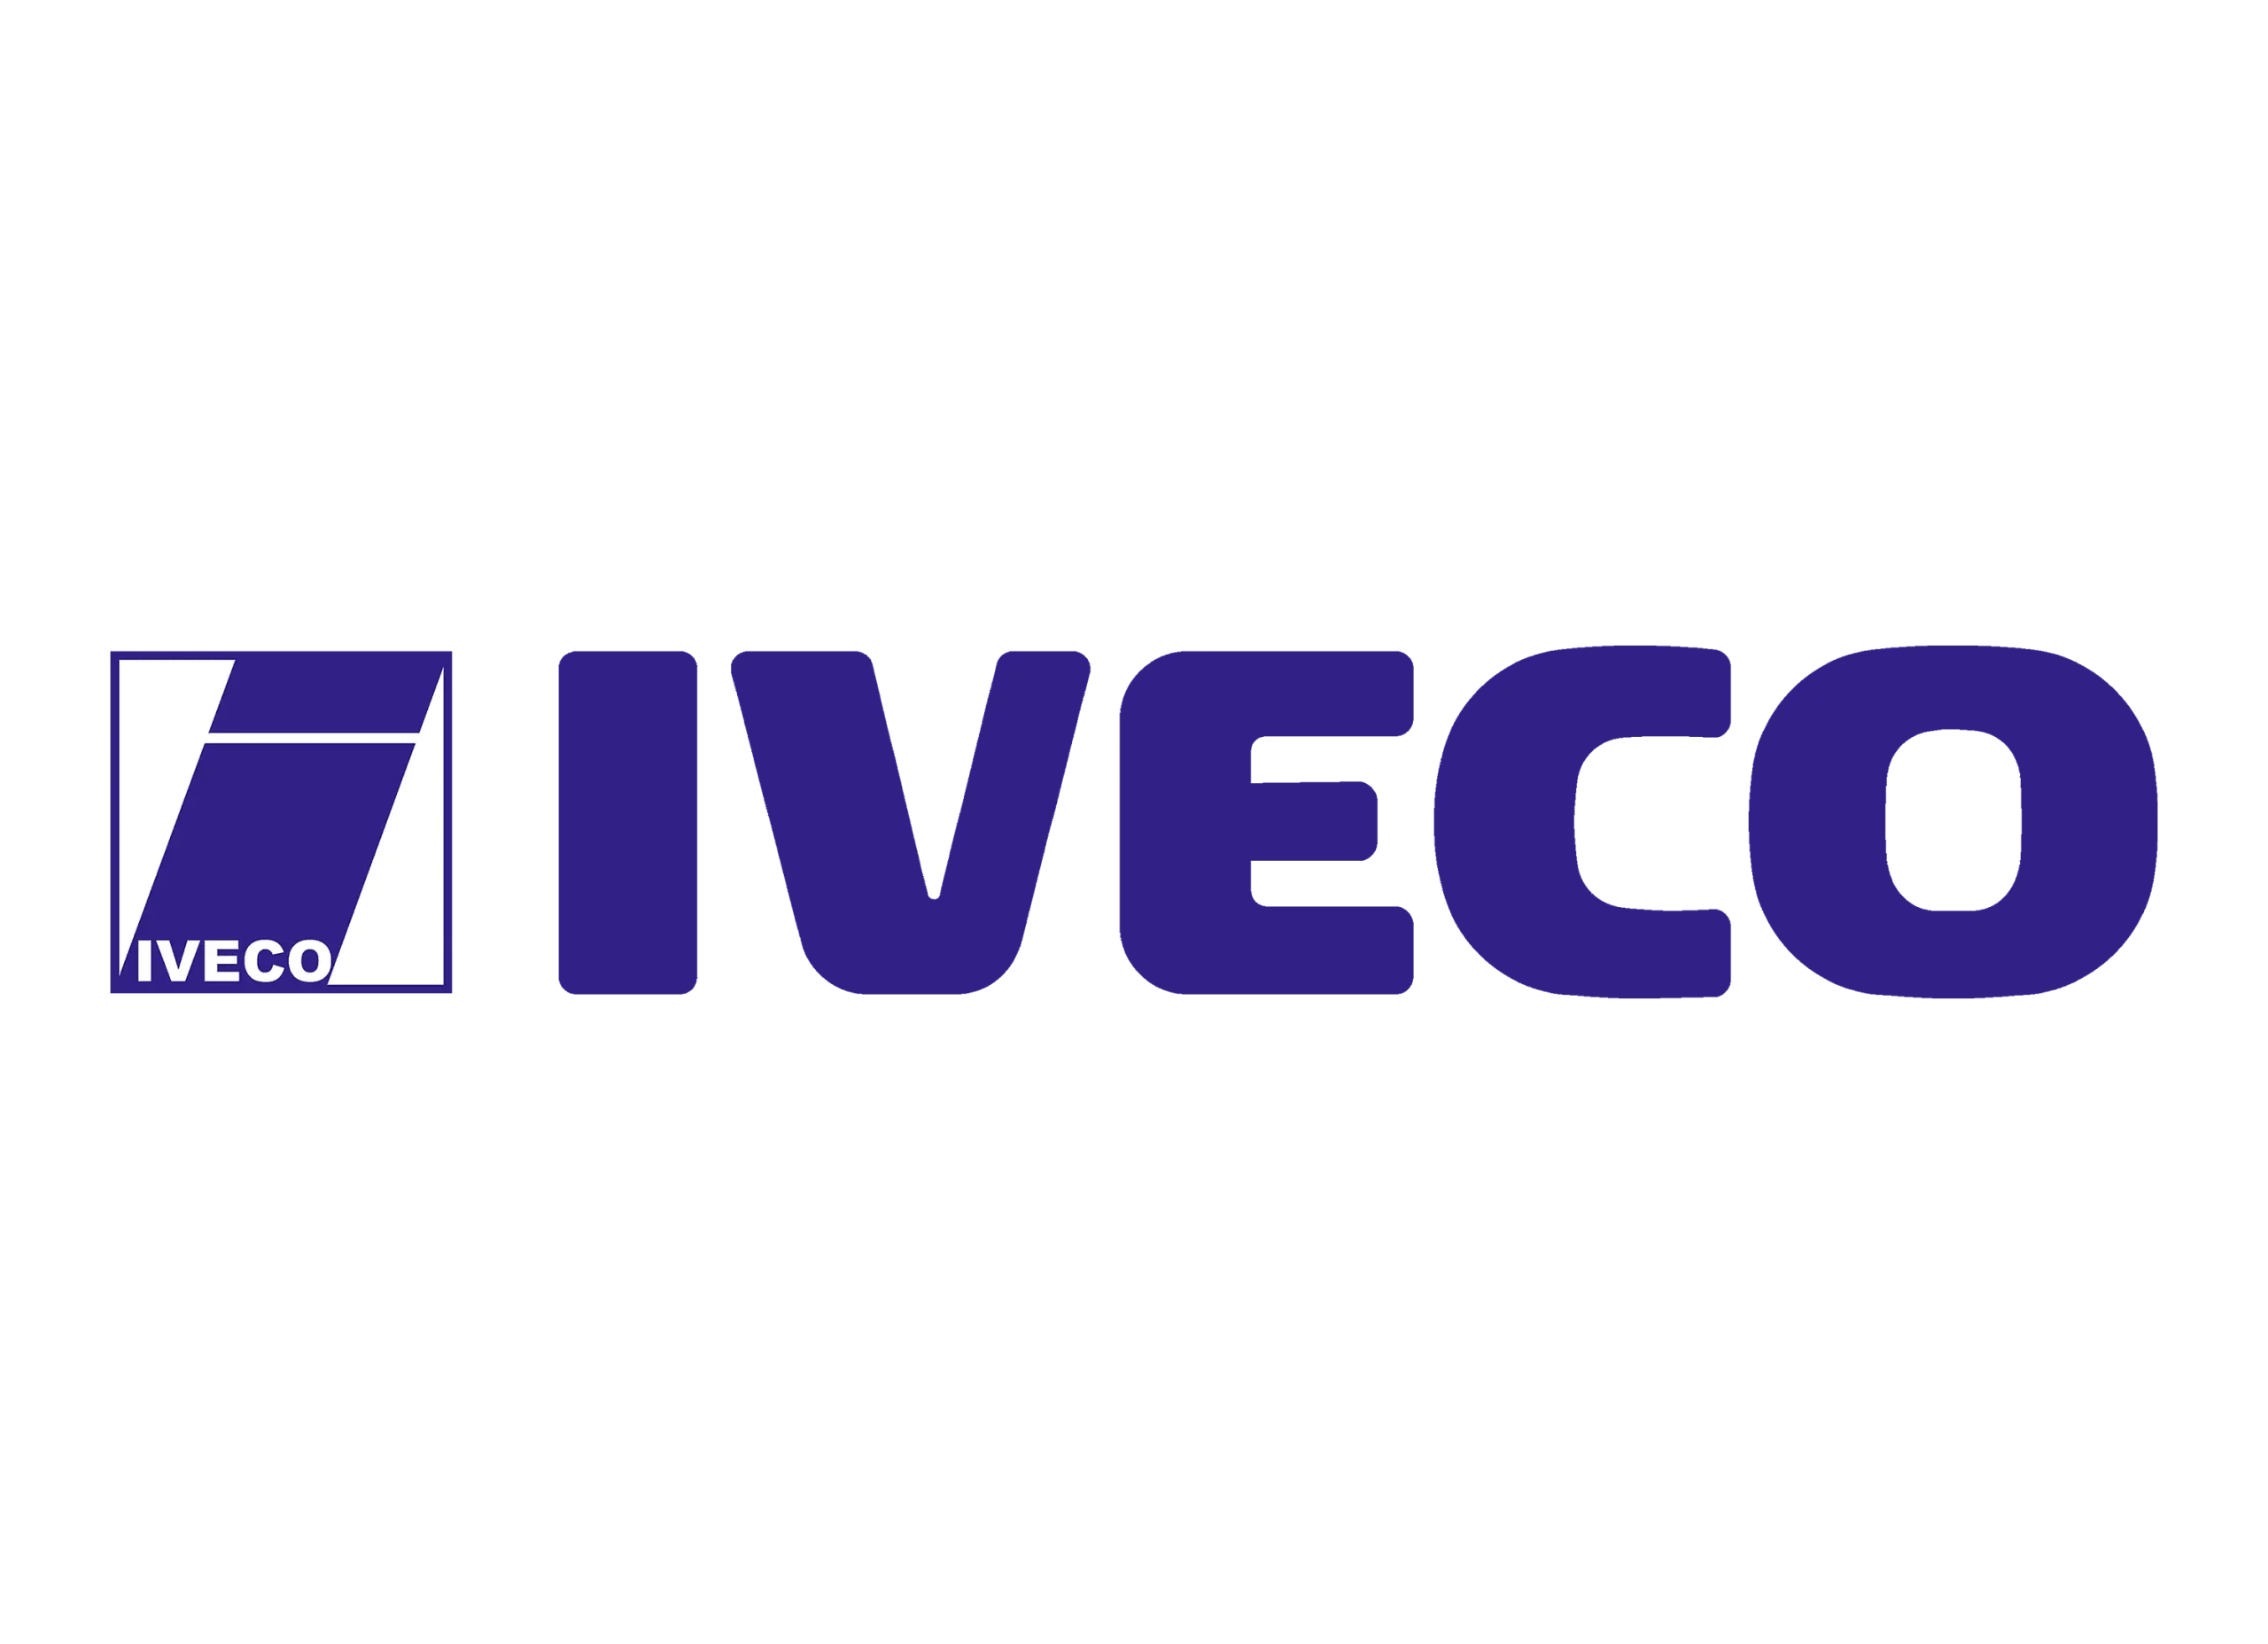 Iveco logo 1977-1979